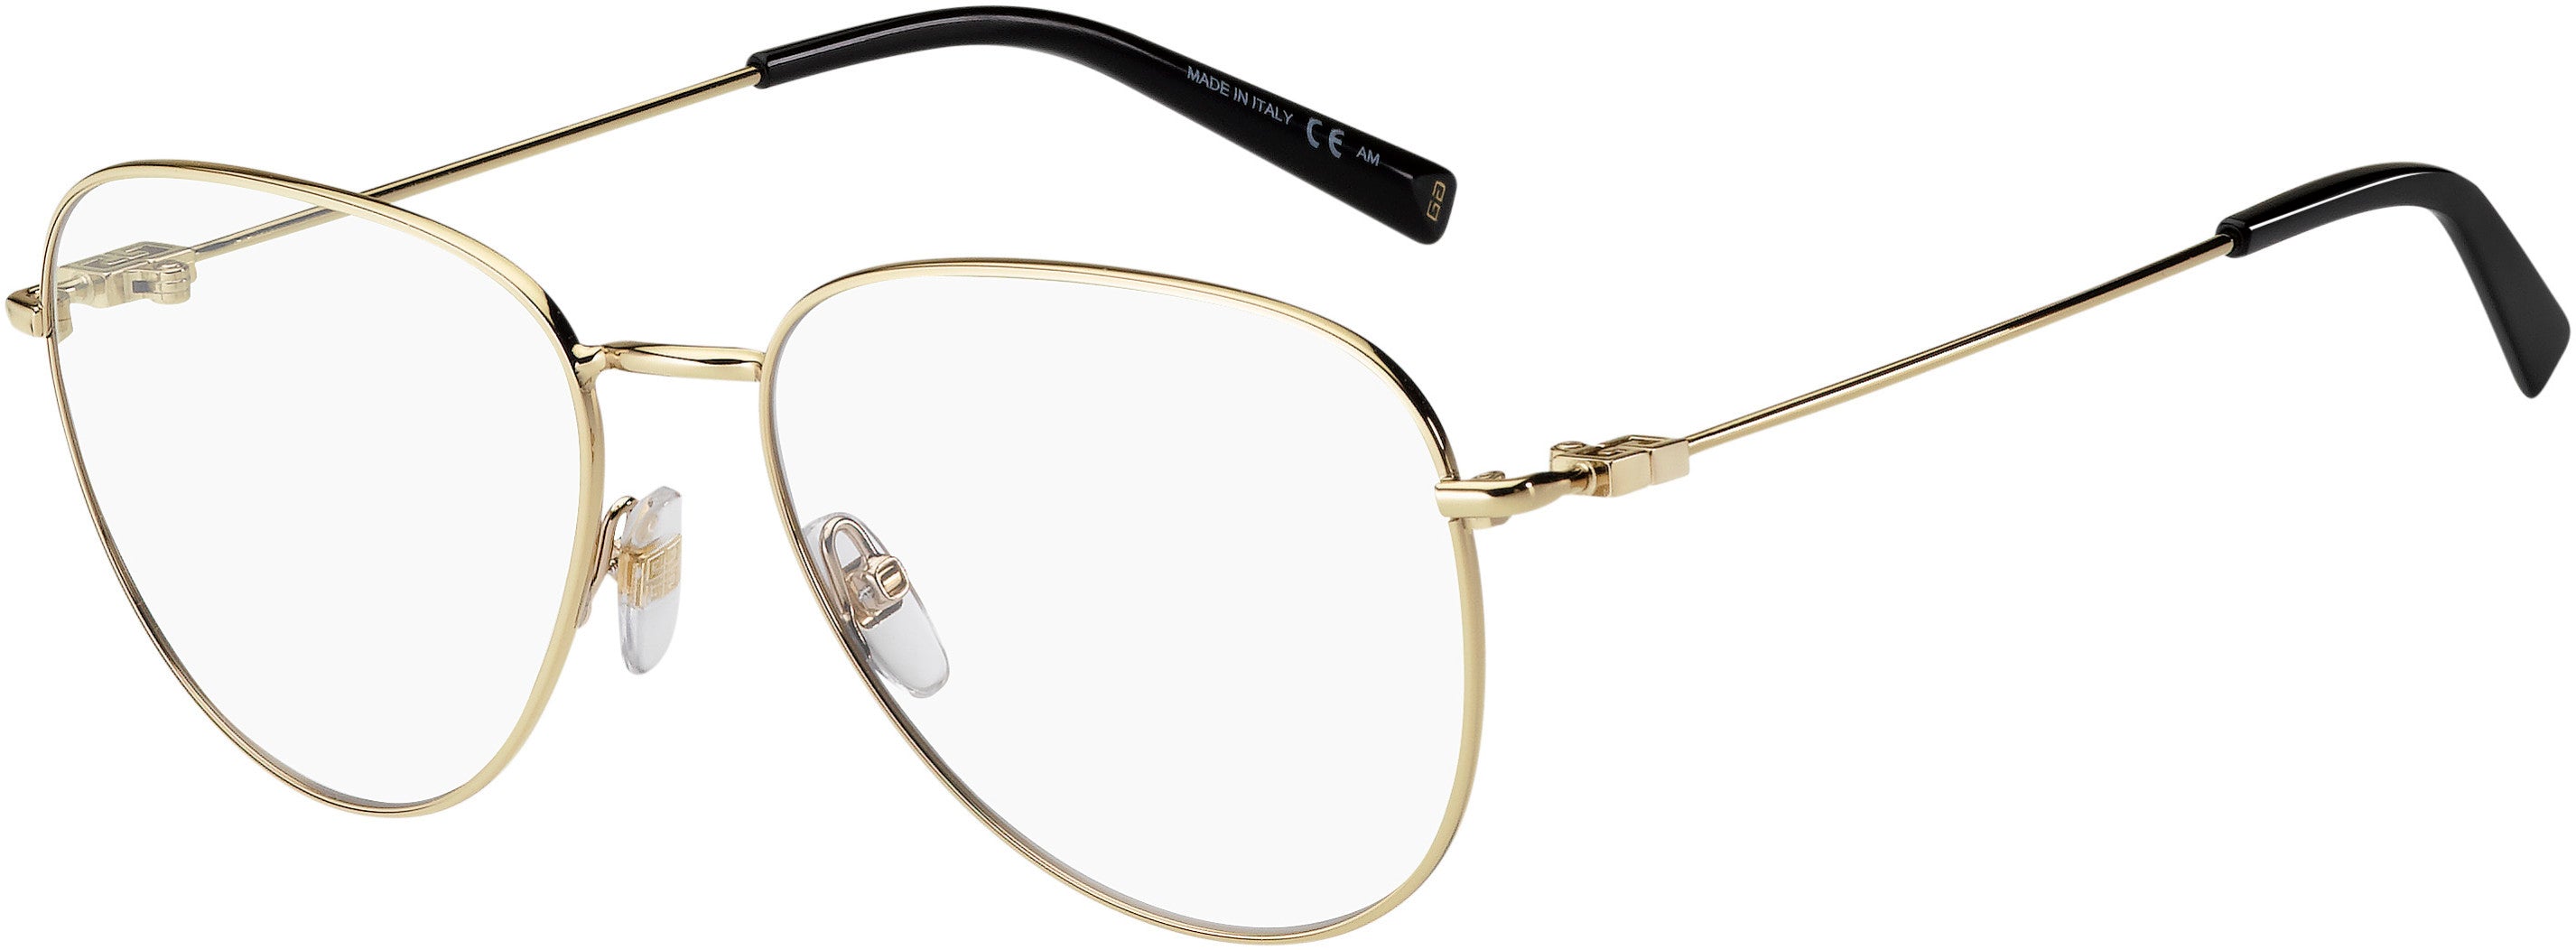  Givenchy 0150 Oval Modified Eyeglasses 0J5G-0J5G  Gold (00 Demo Lens)